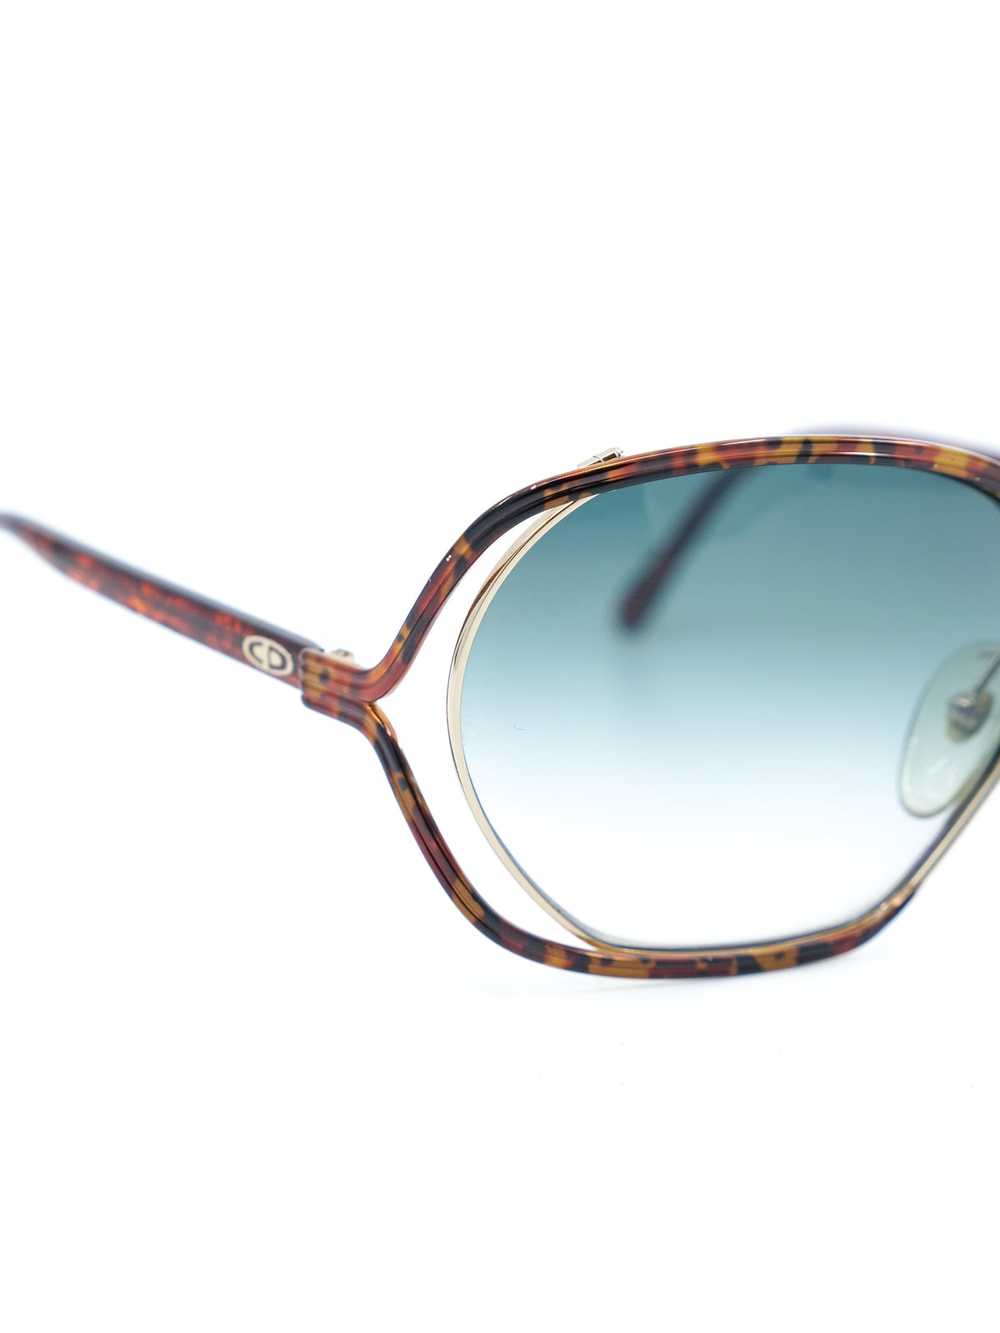 Christian Dior Tortoiseshell Butterfly Sunglasses - image 3